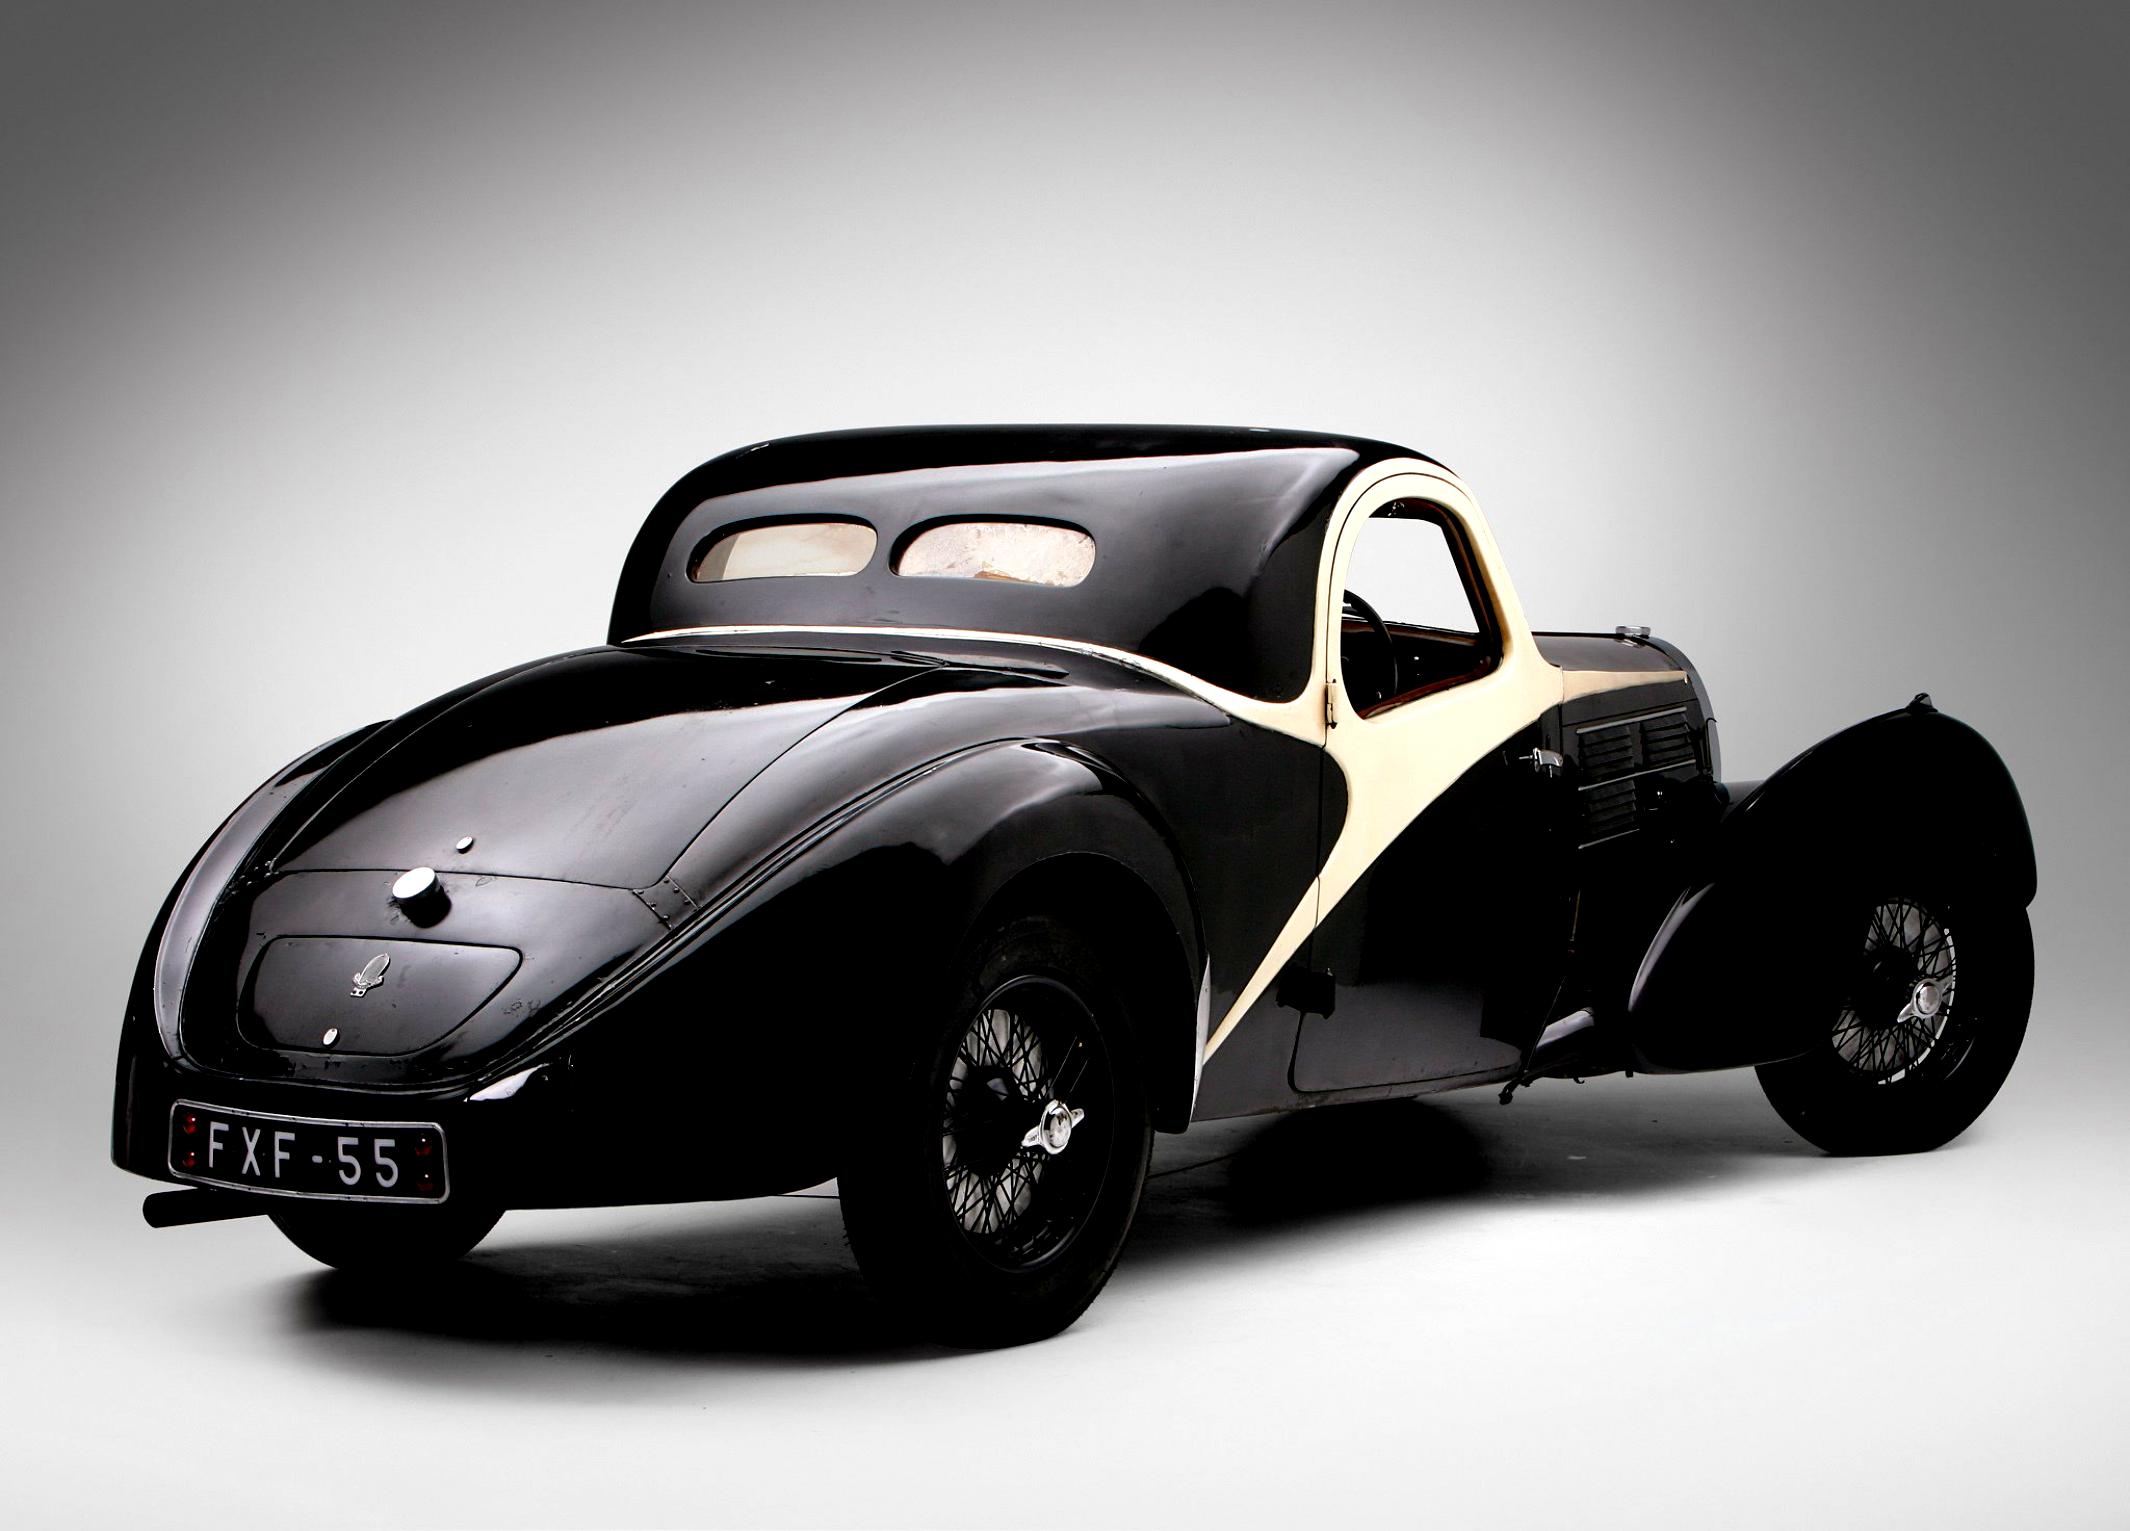 Bugatti Type 57 1934 #23